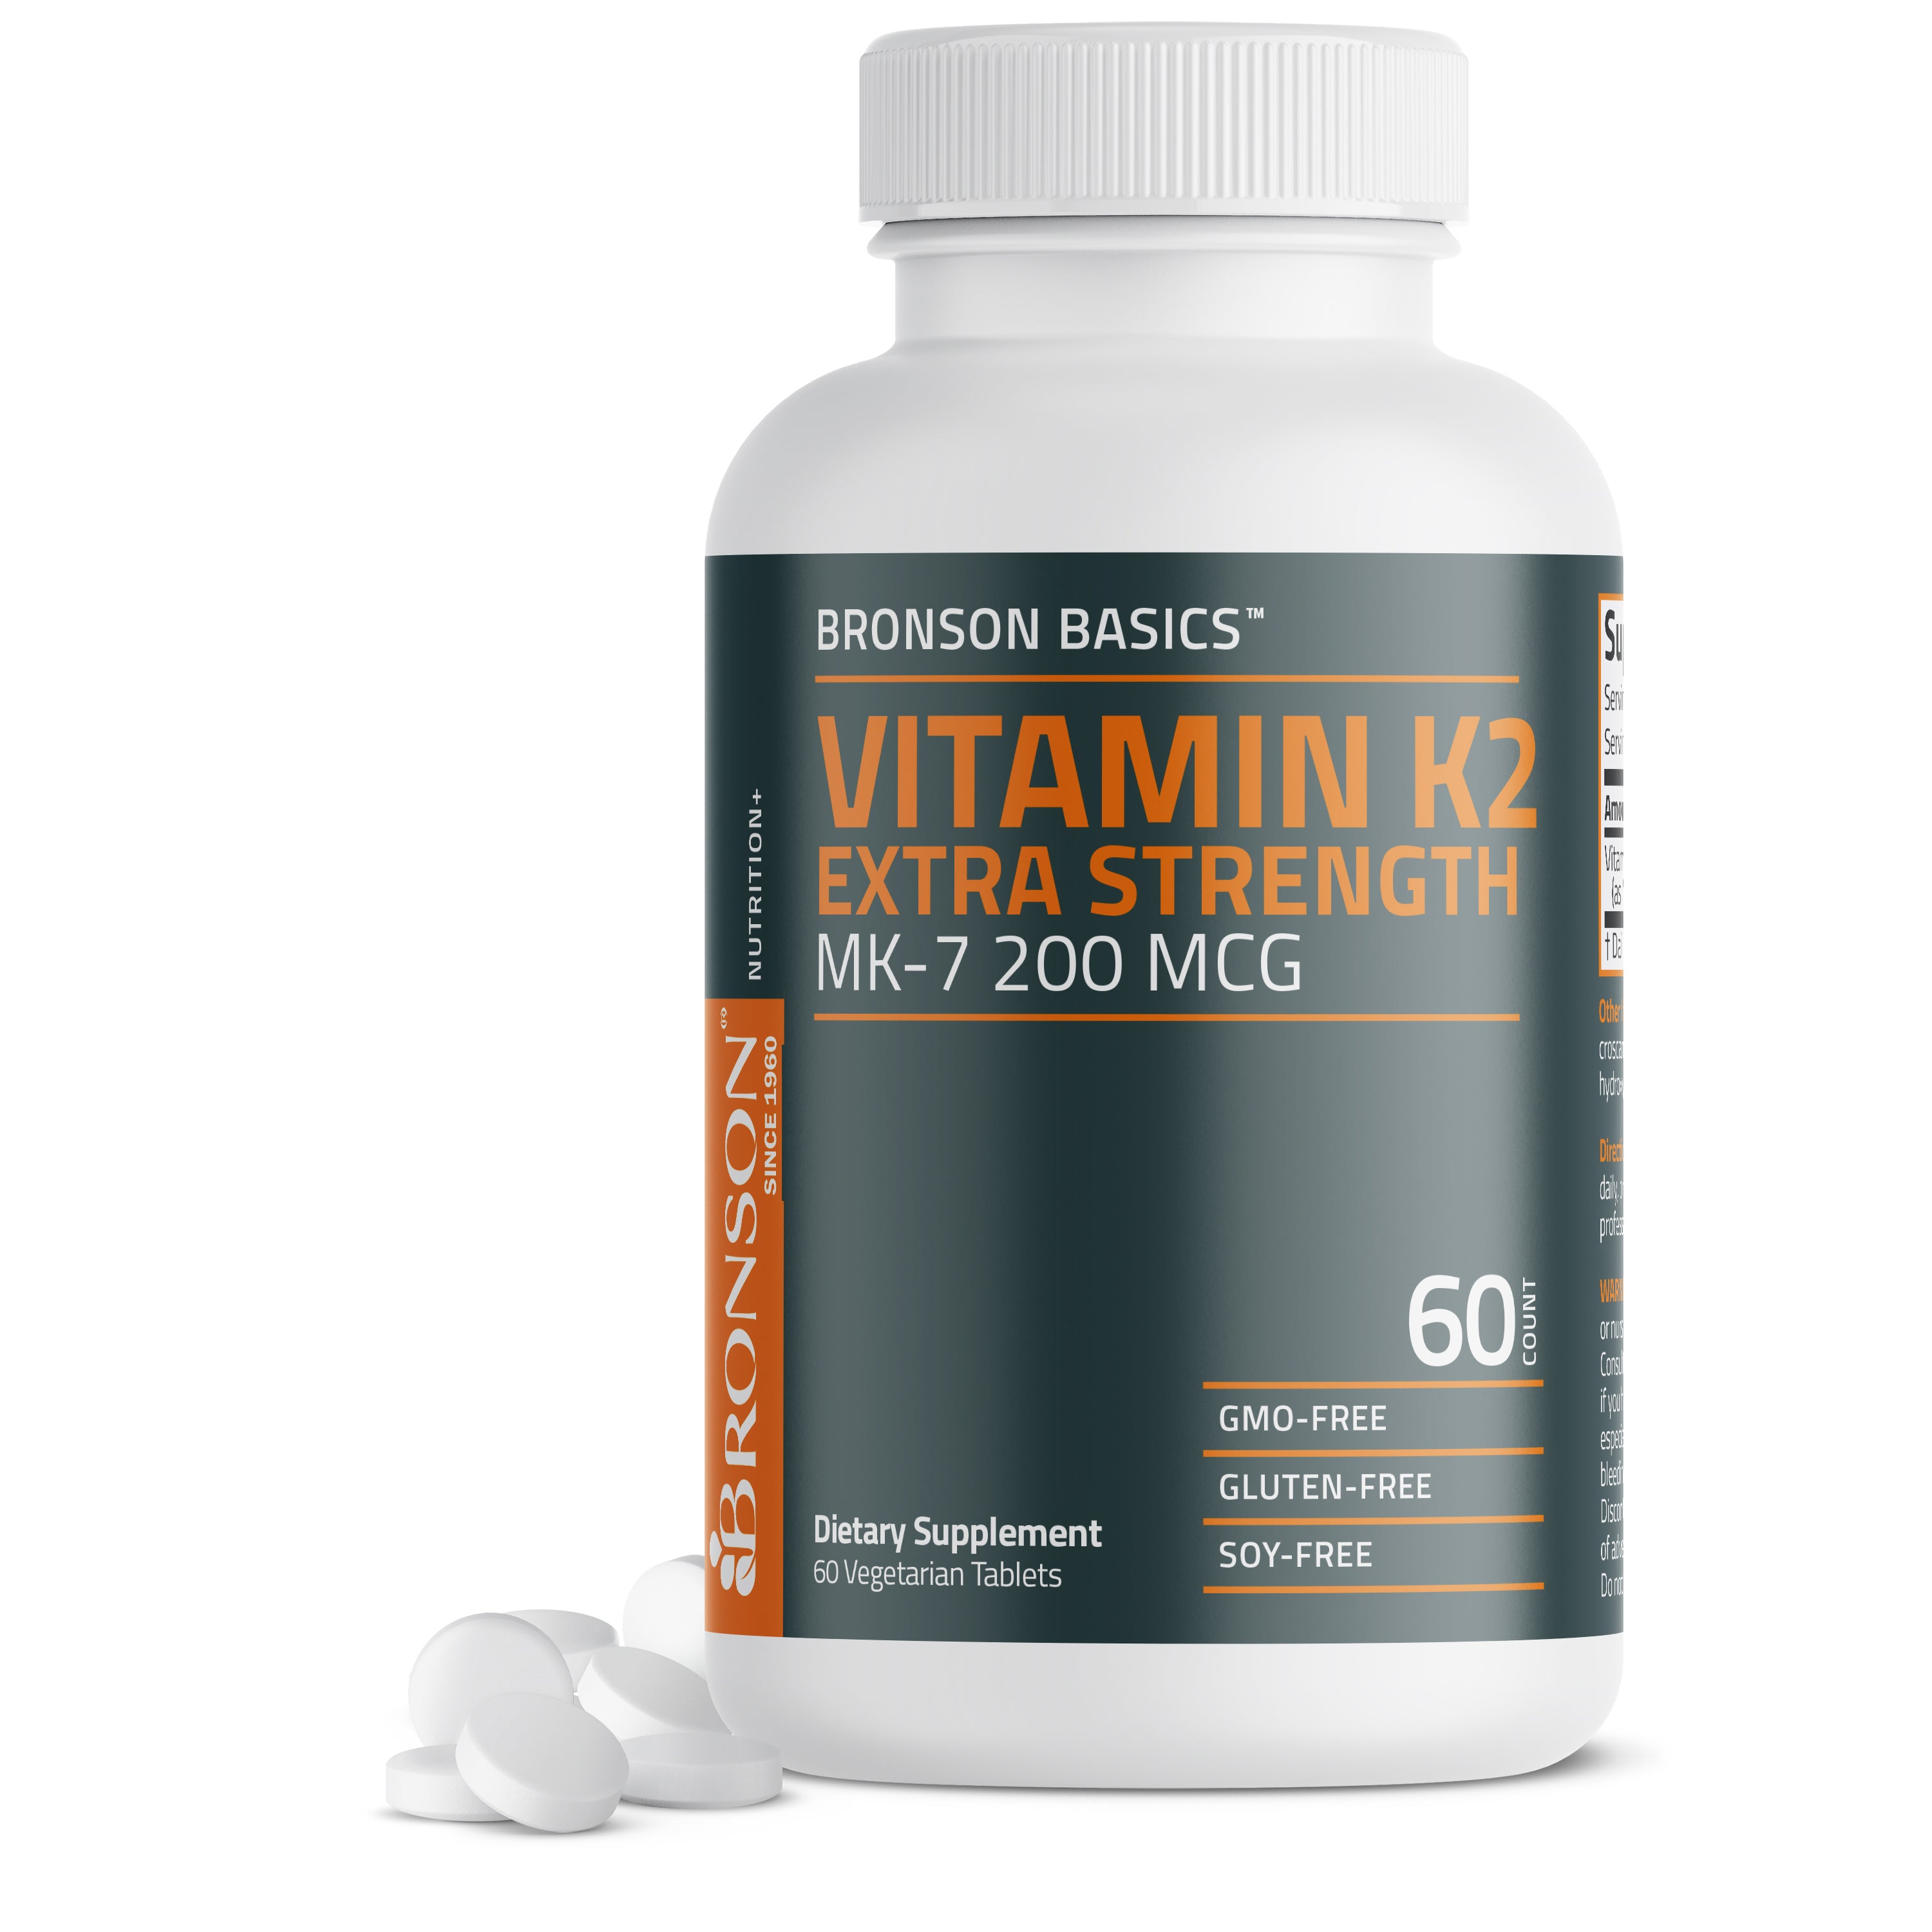 Vitamin K2 Extra Strength MK-7 200 MCG